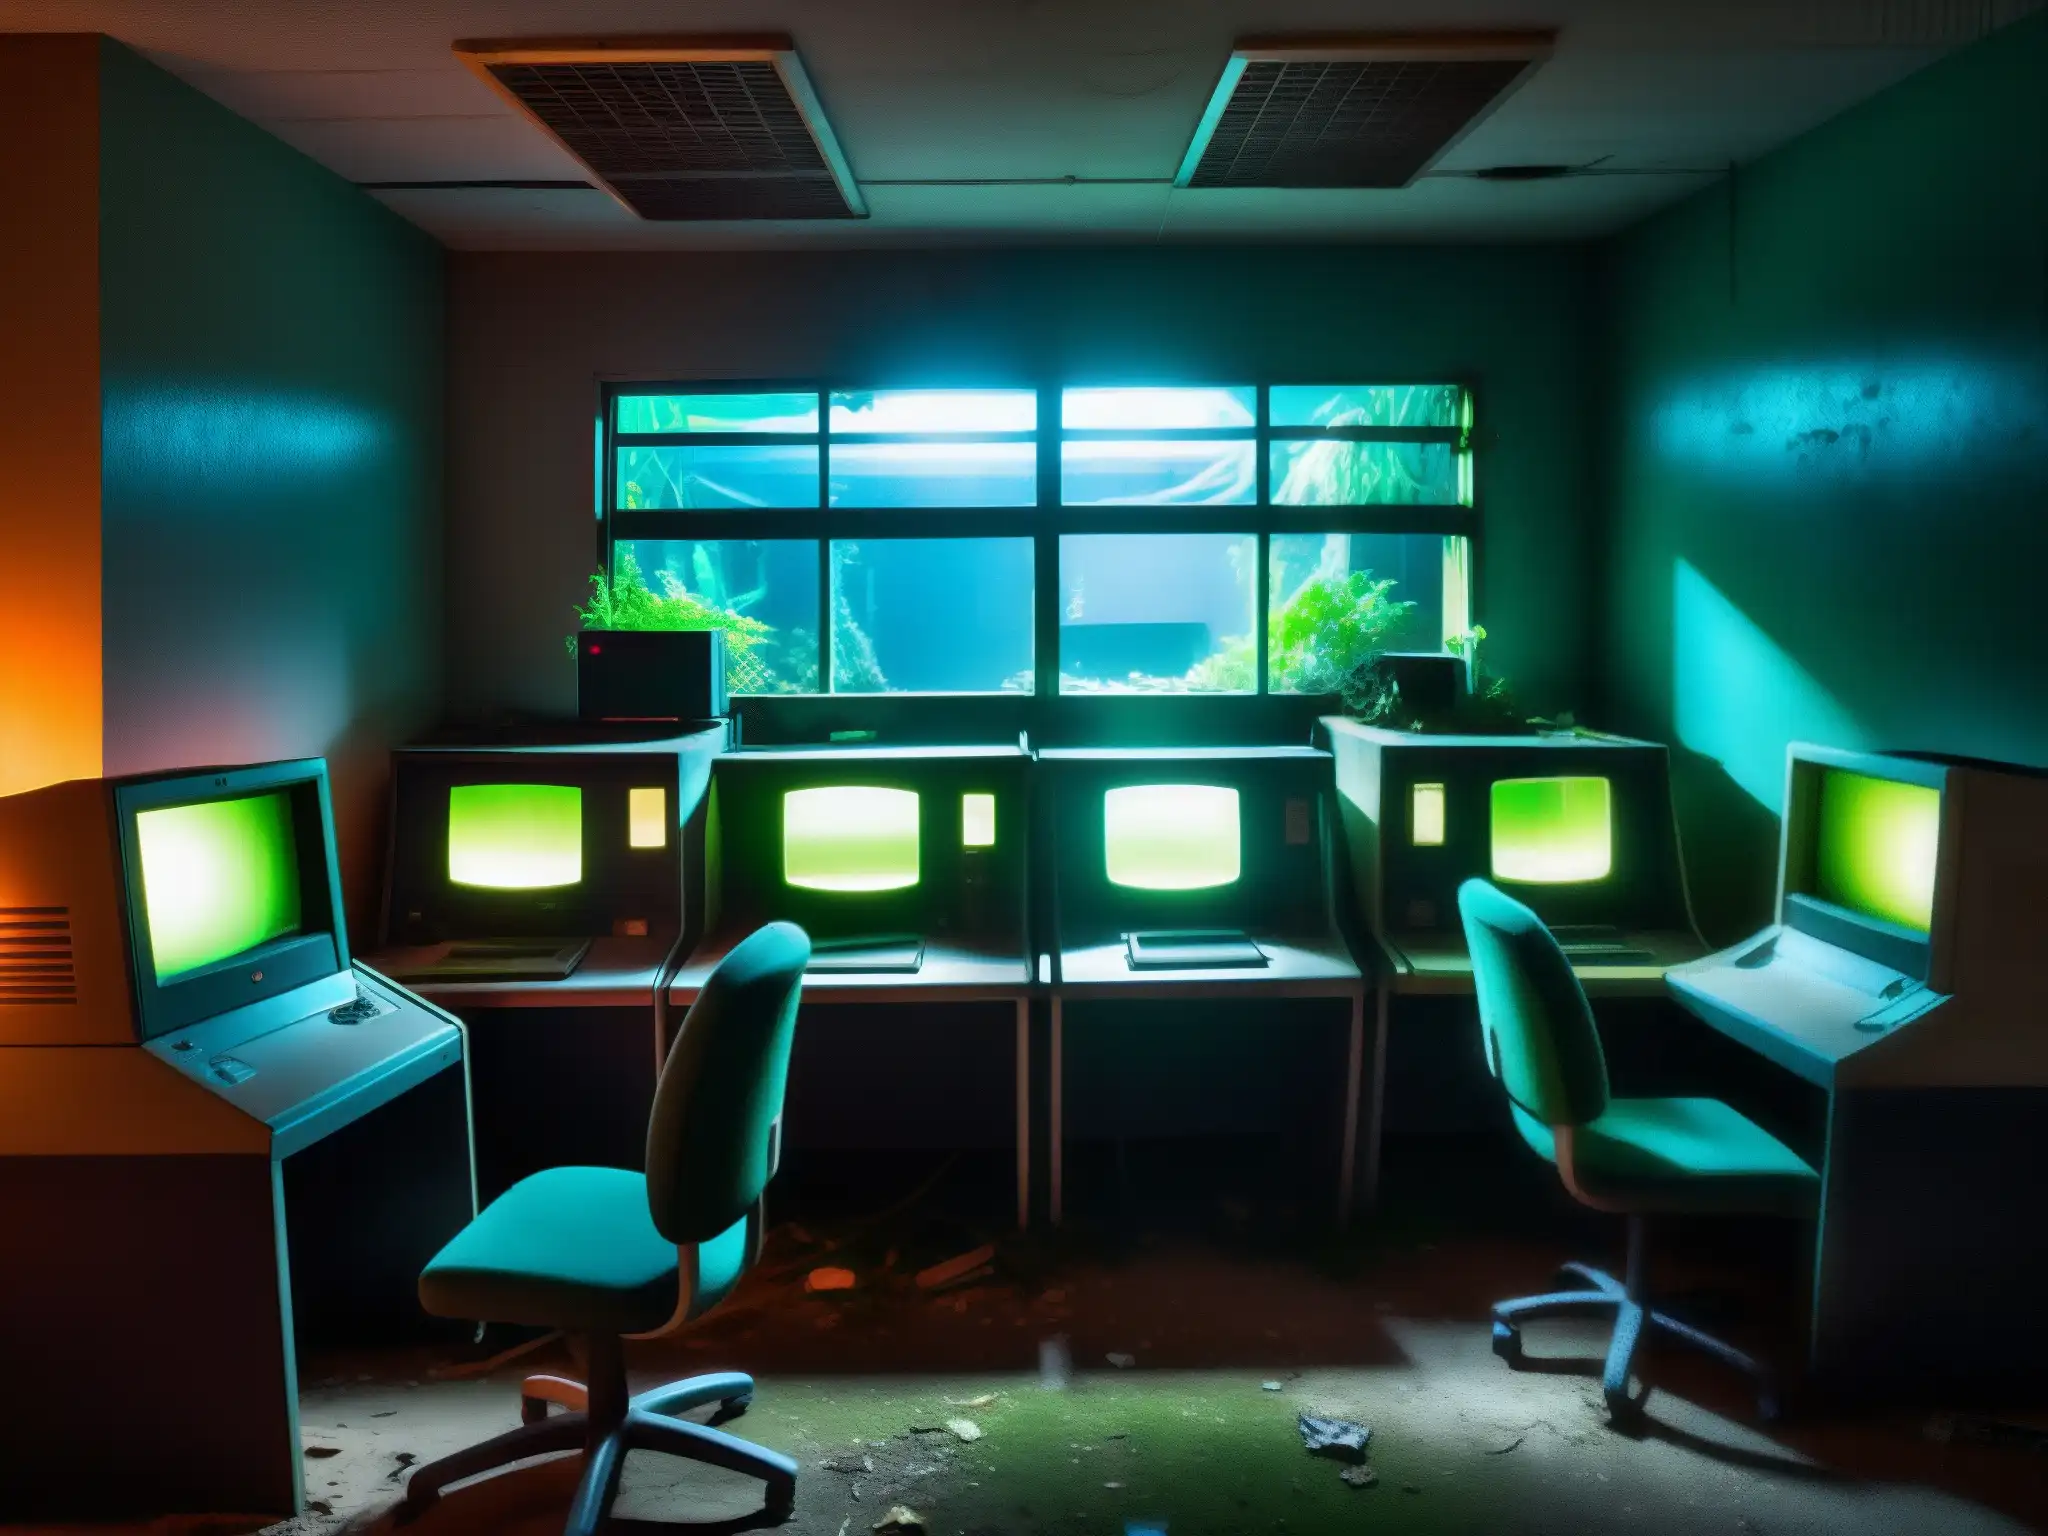 Un misterioso café abandonado, con luces parpadeantes y pantallas de computadora que iluminan el aire polvoriento